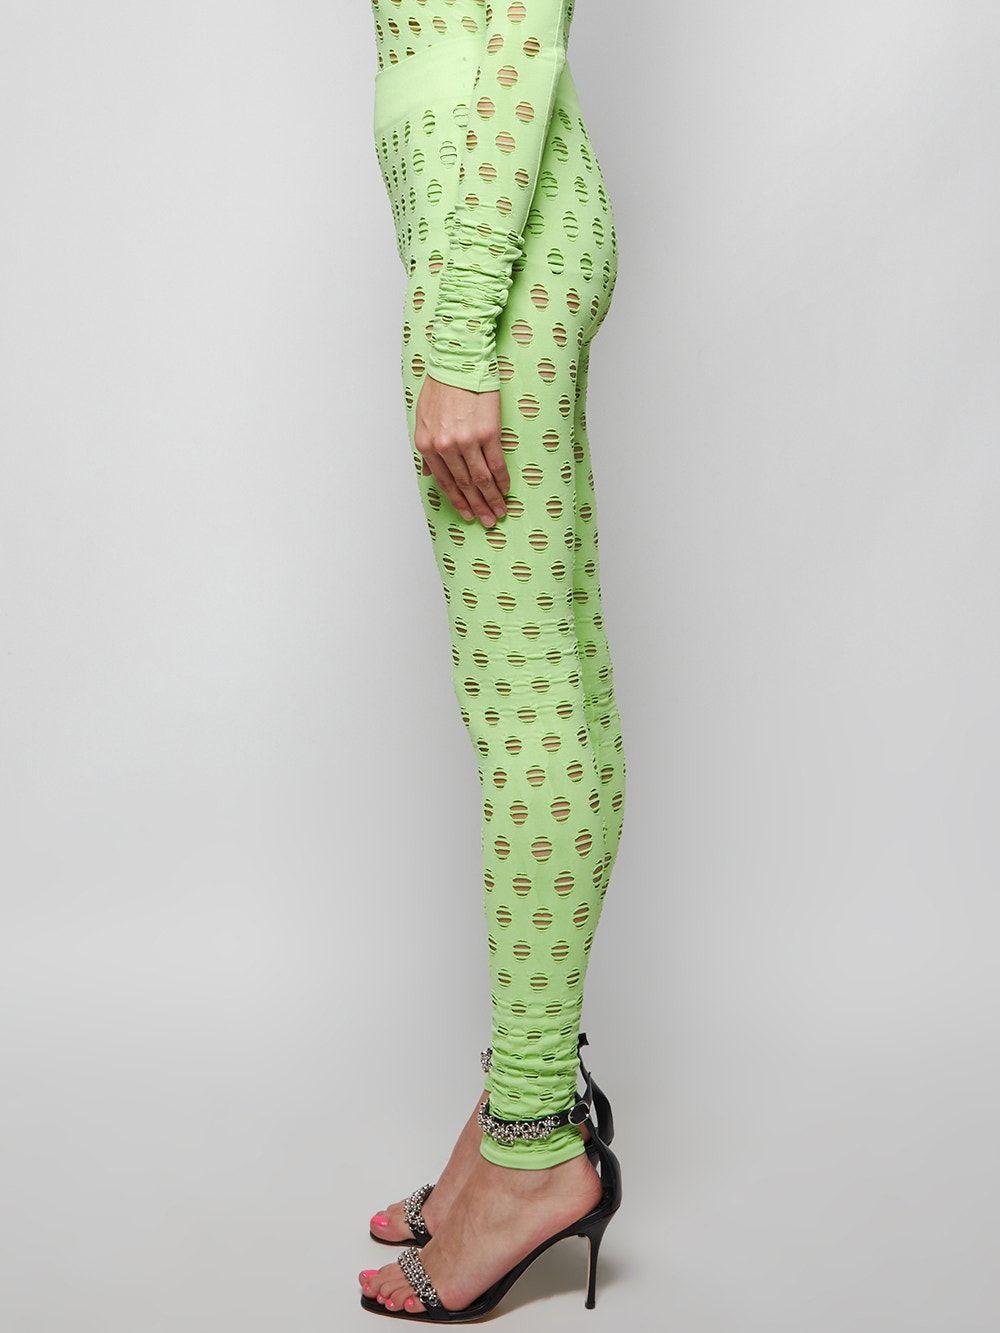 Maisie Wilen Perforated leggings in Green